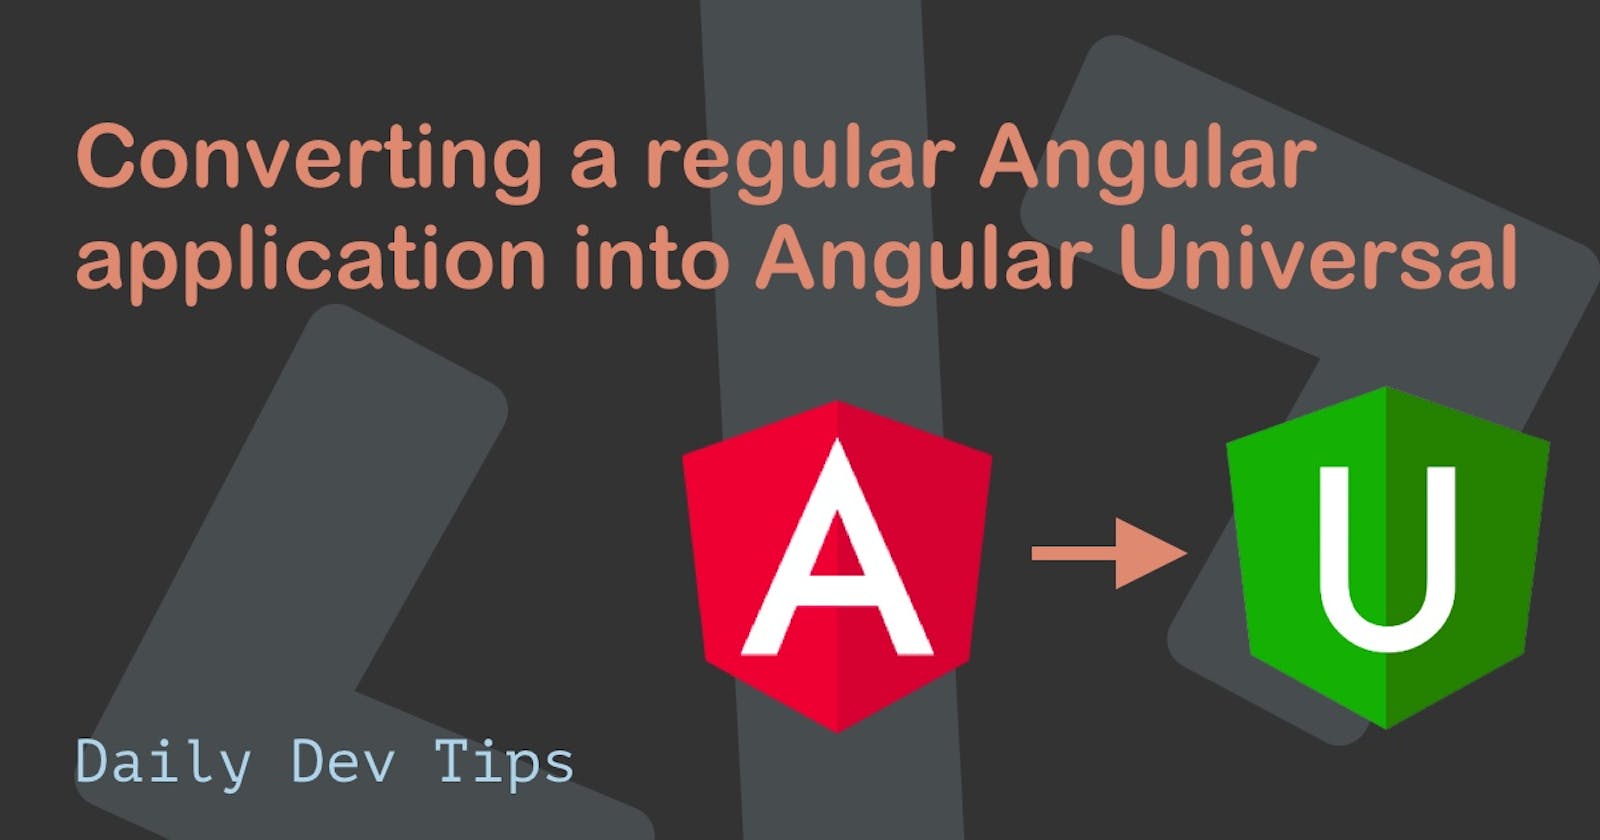 Converting a regular Angular application into Angular Universal